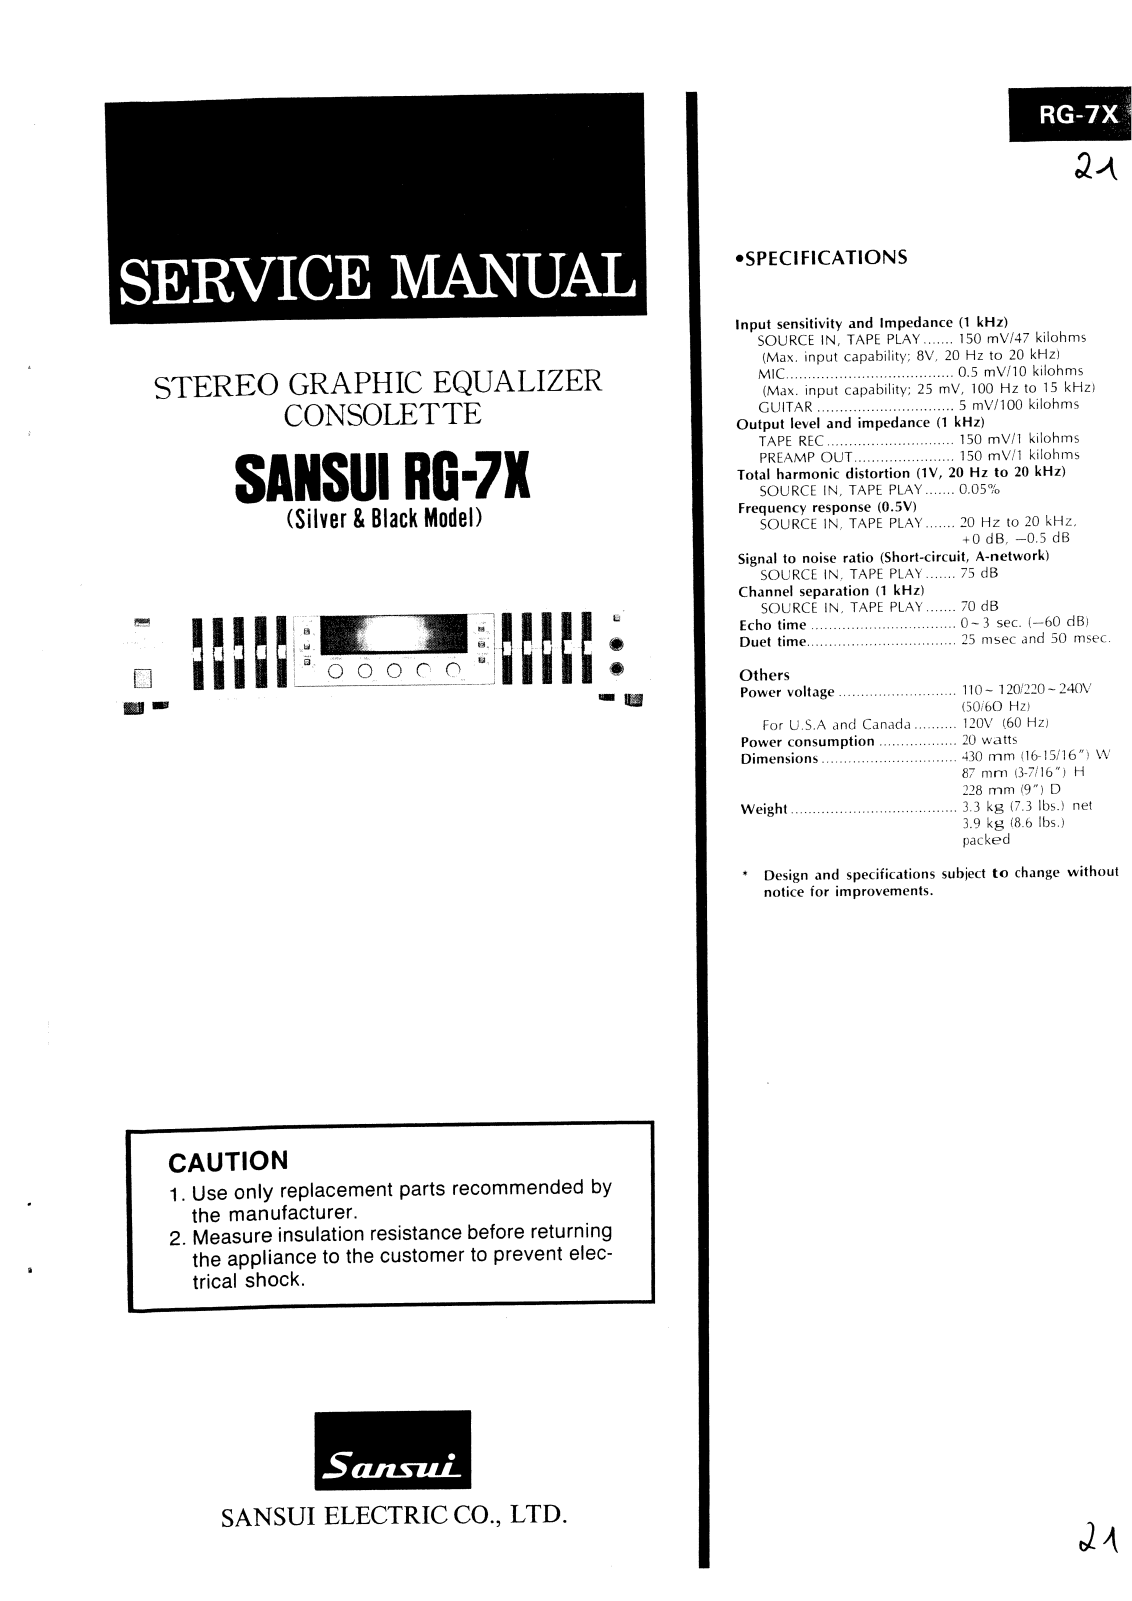 Sansui RG-7-X Service manual